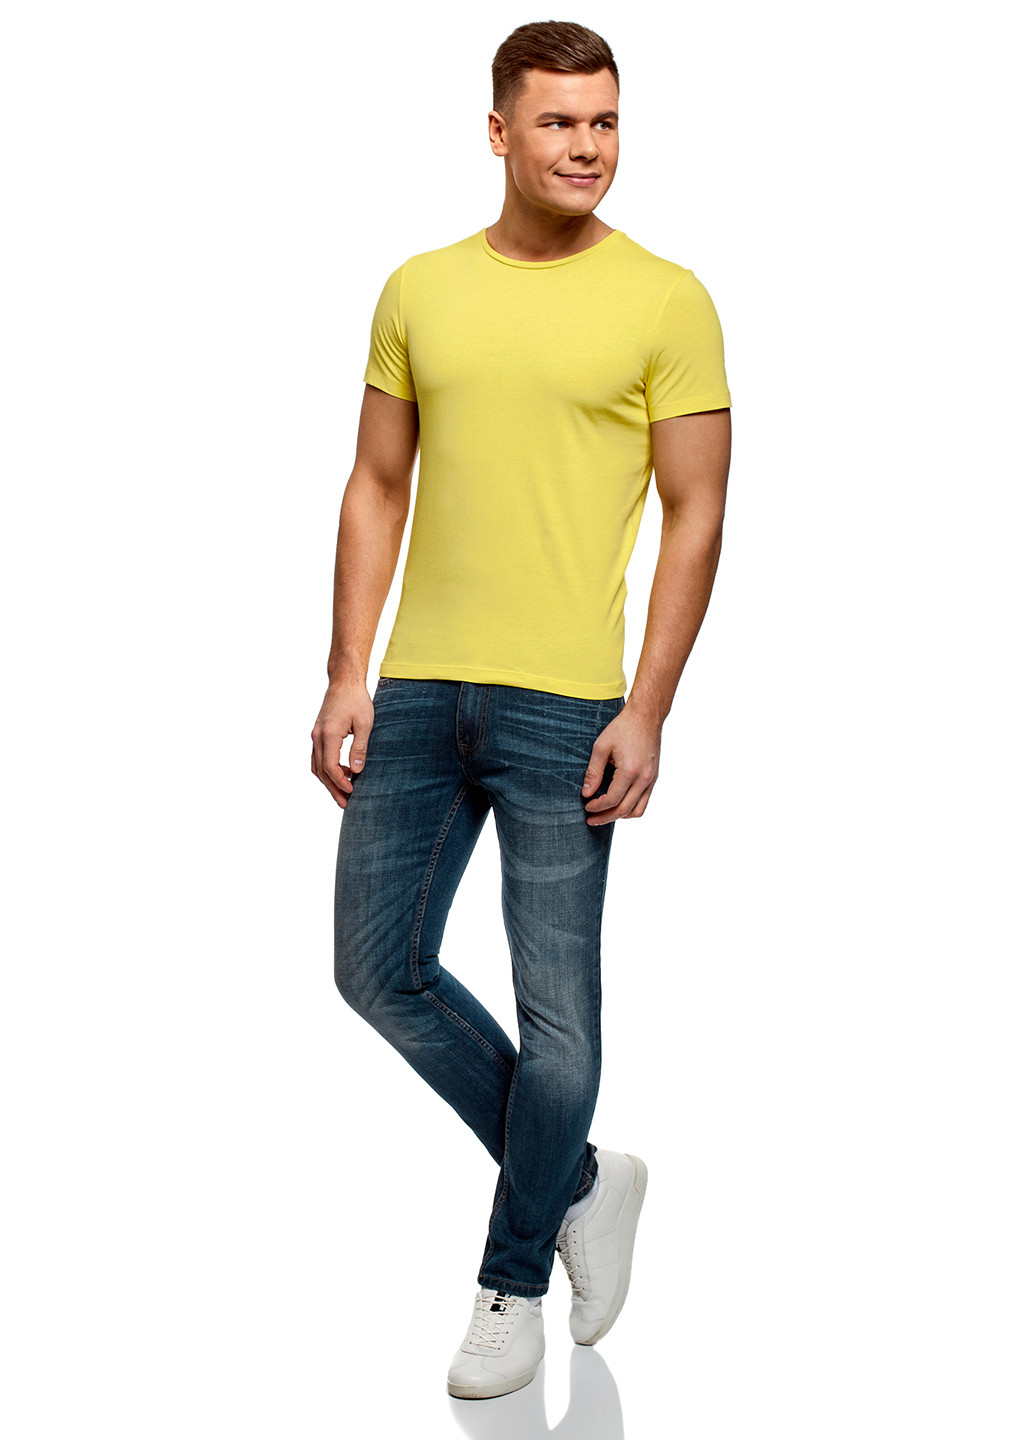 Жовта футболка Oodji